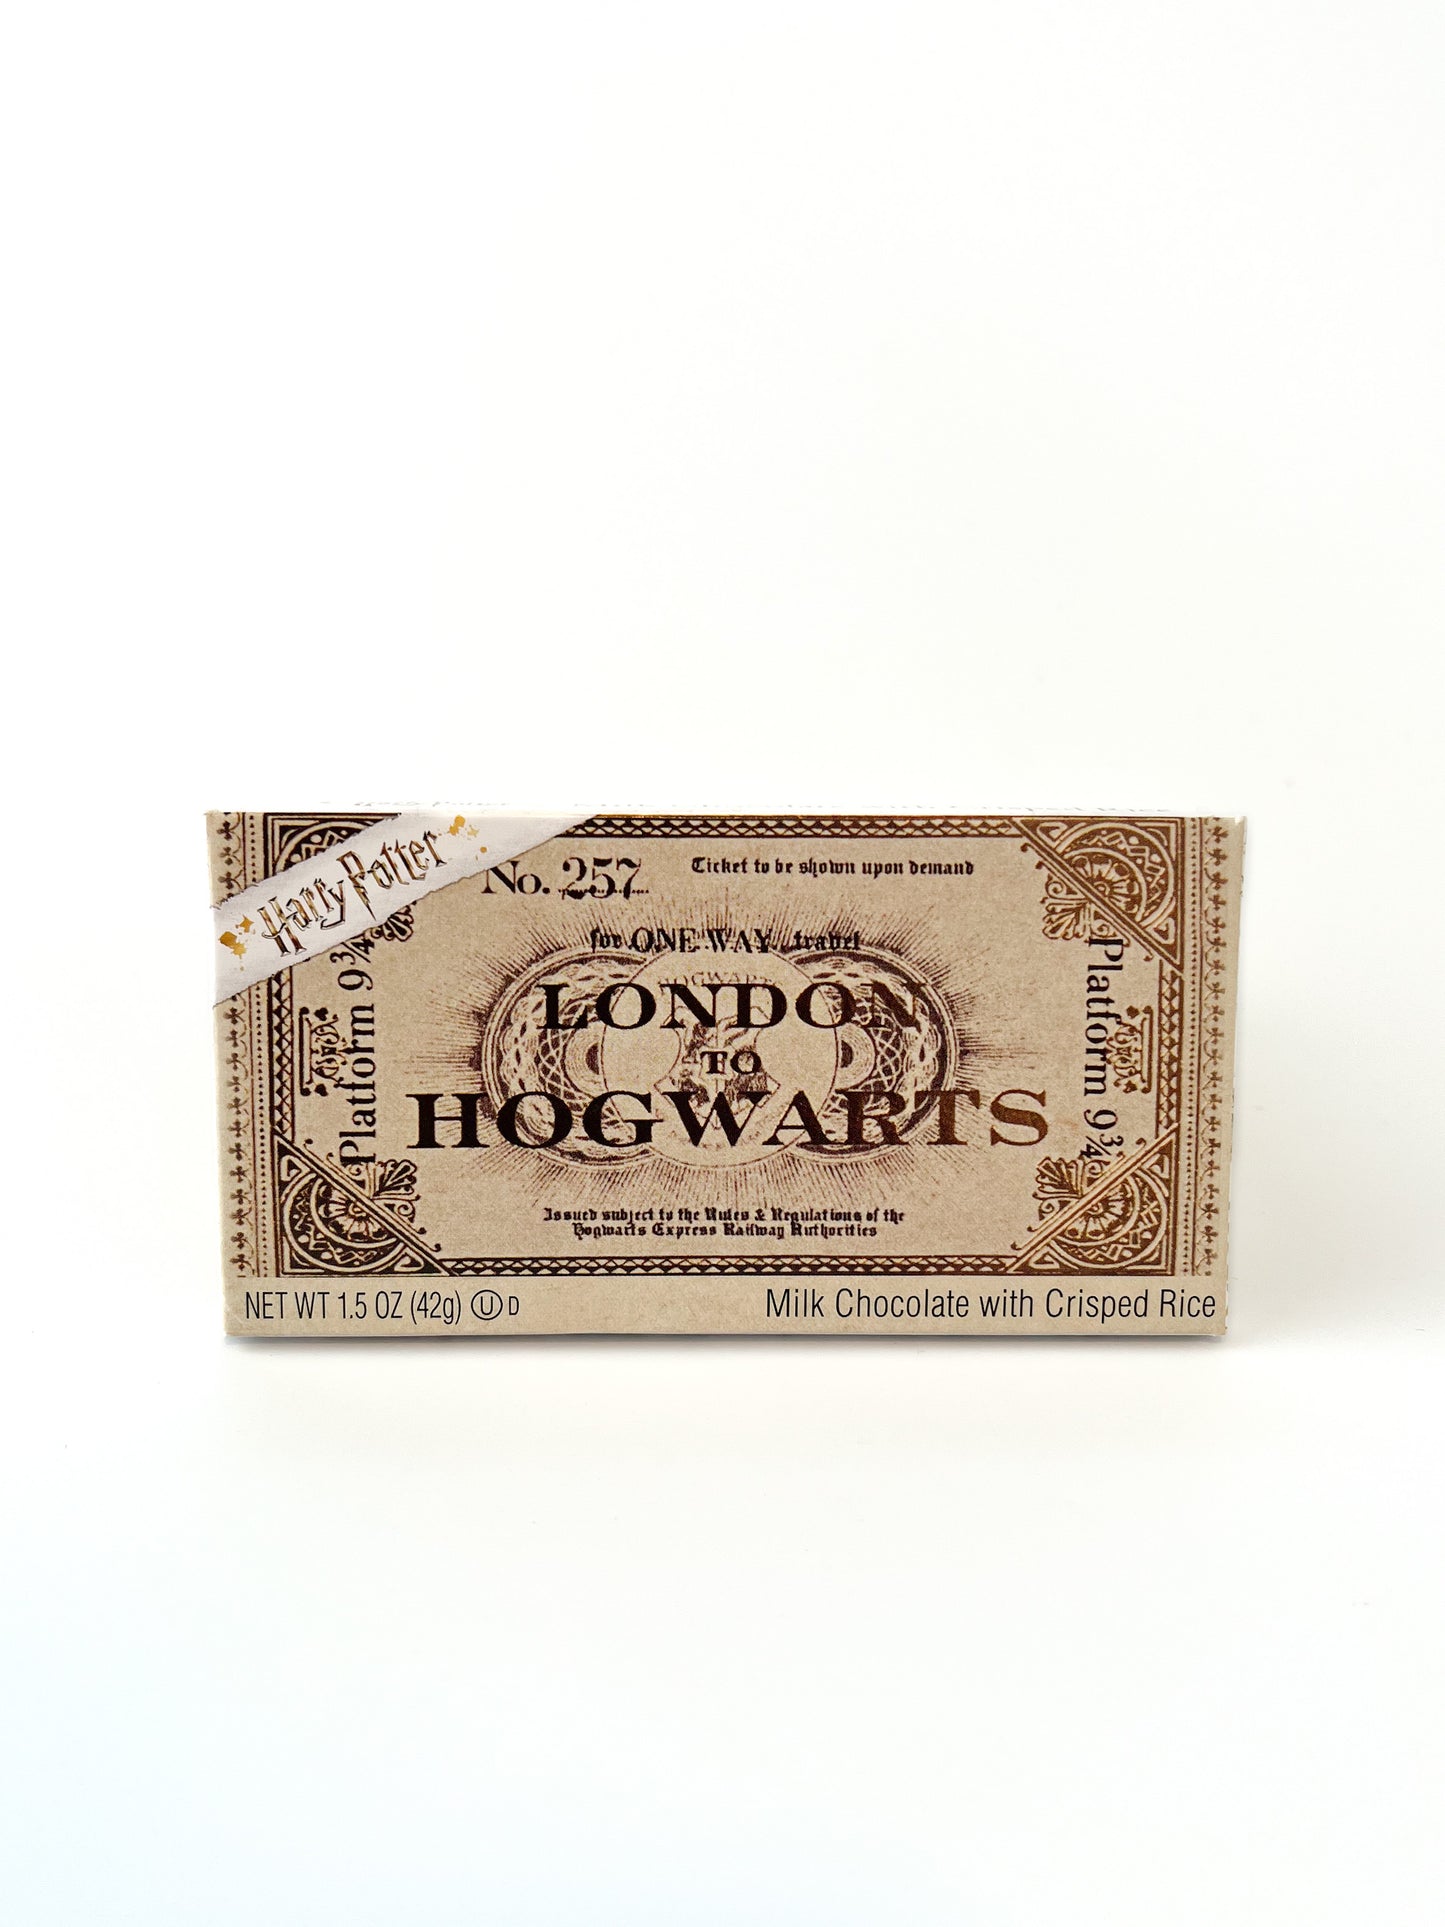 Harry Potter Hogwarts Express Ticket Bar